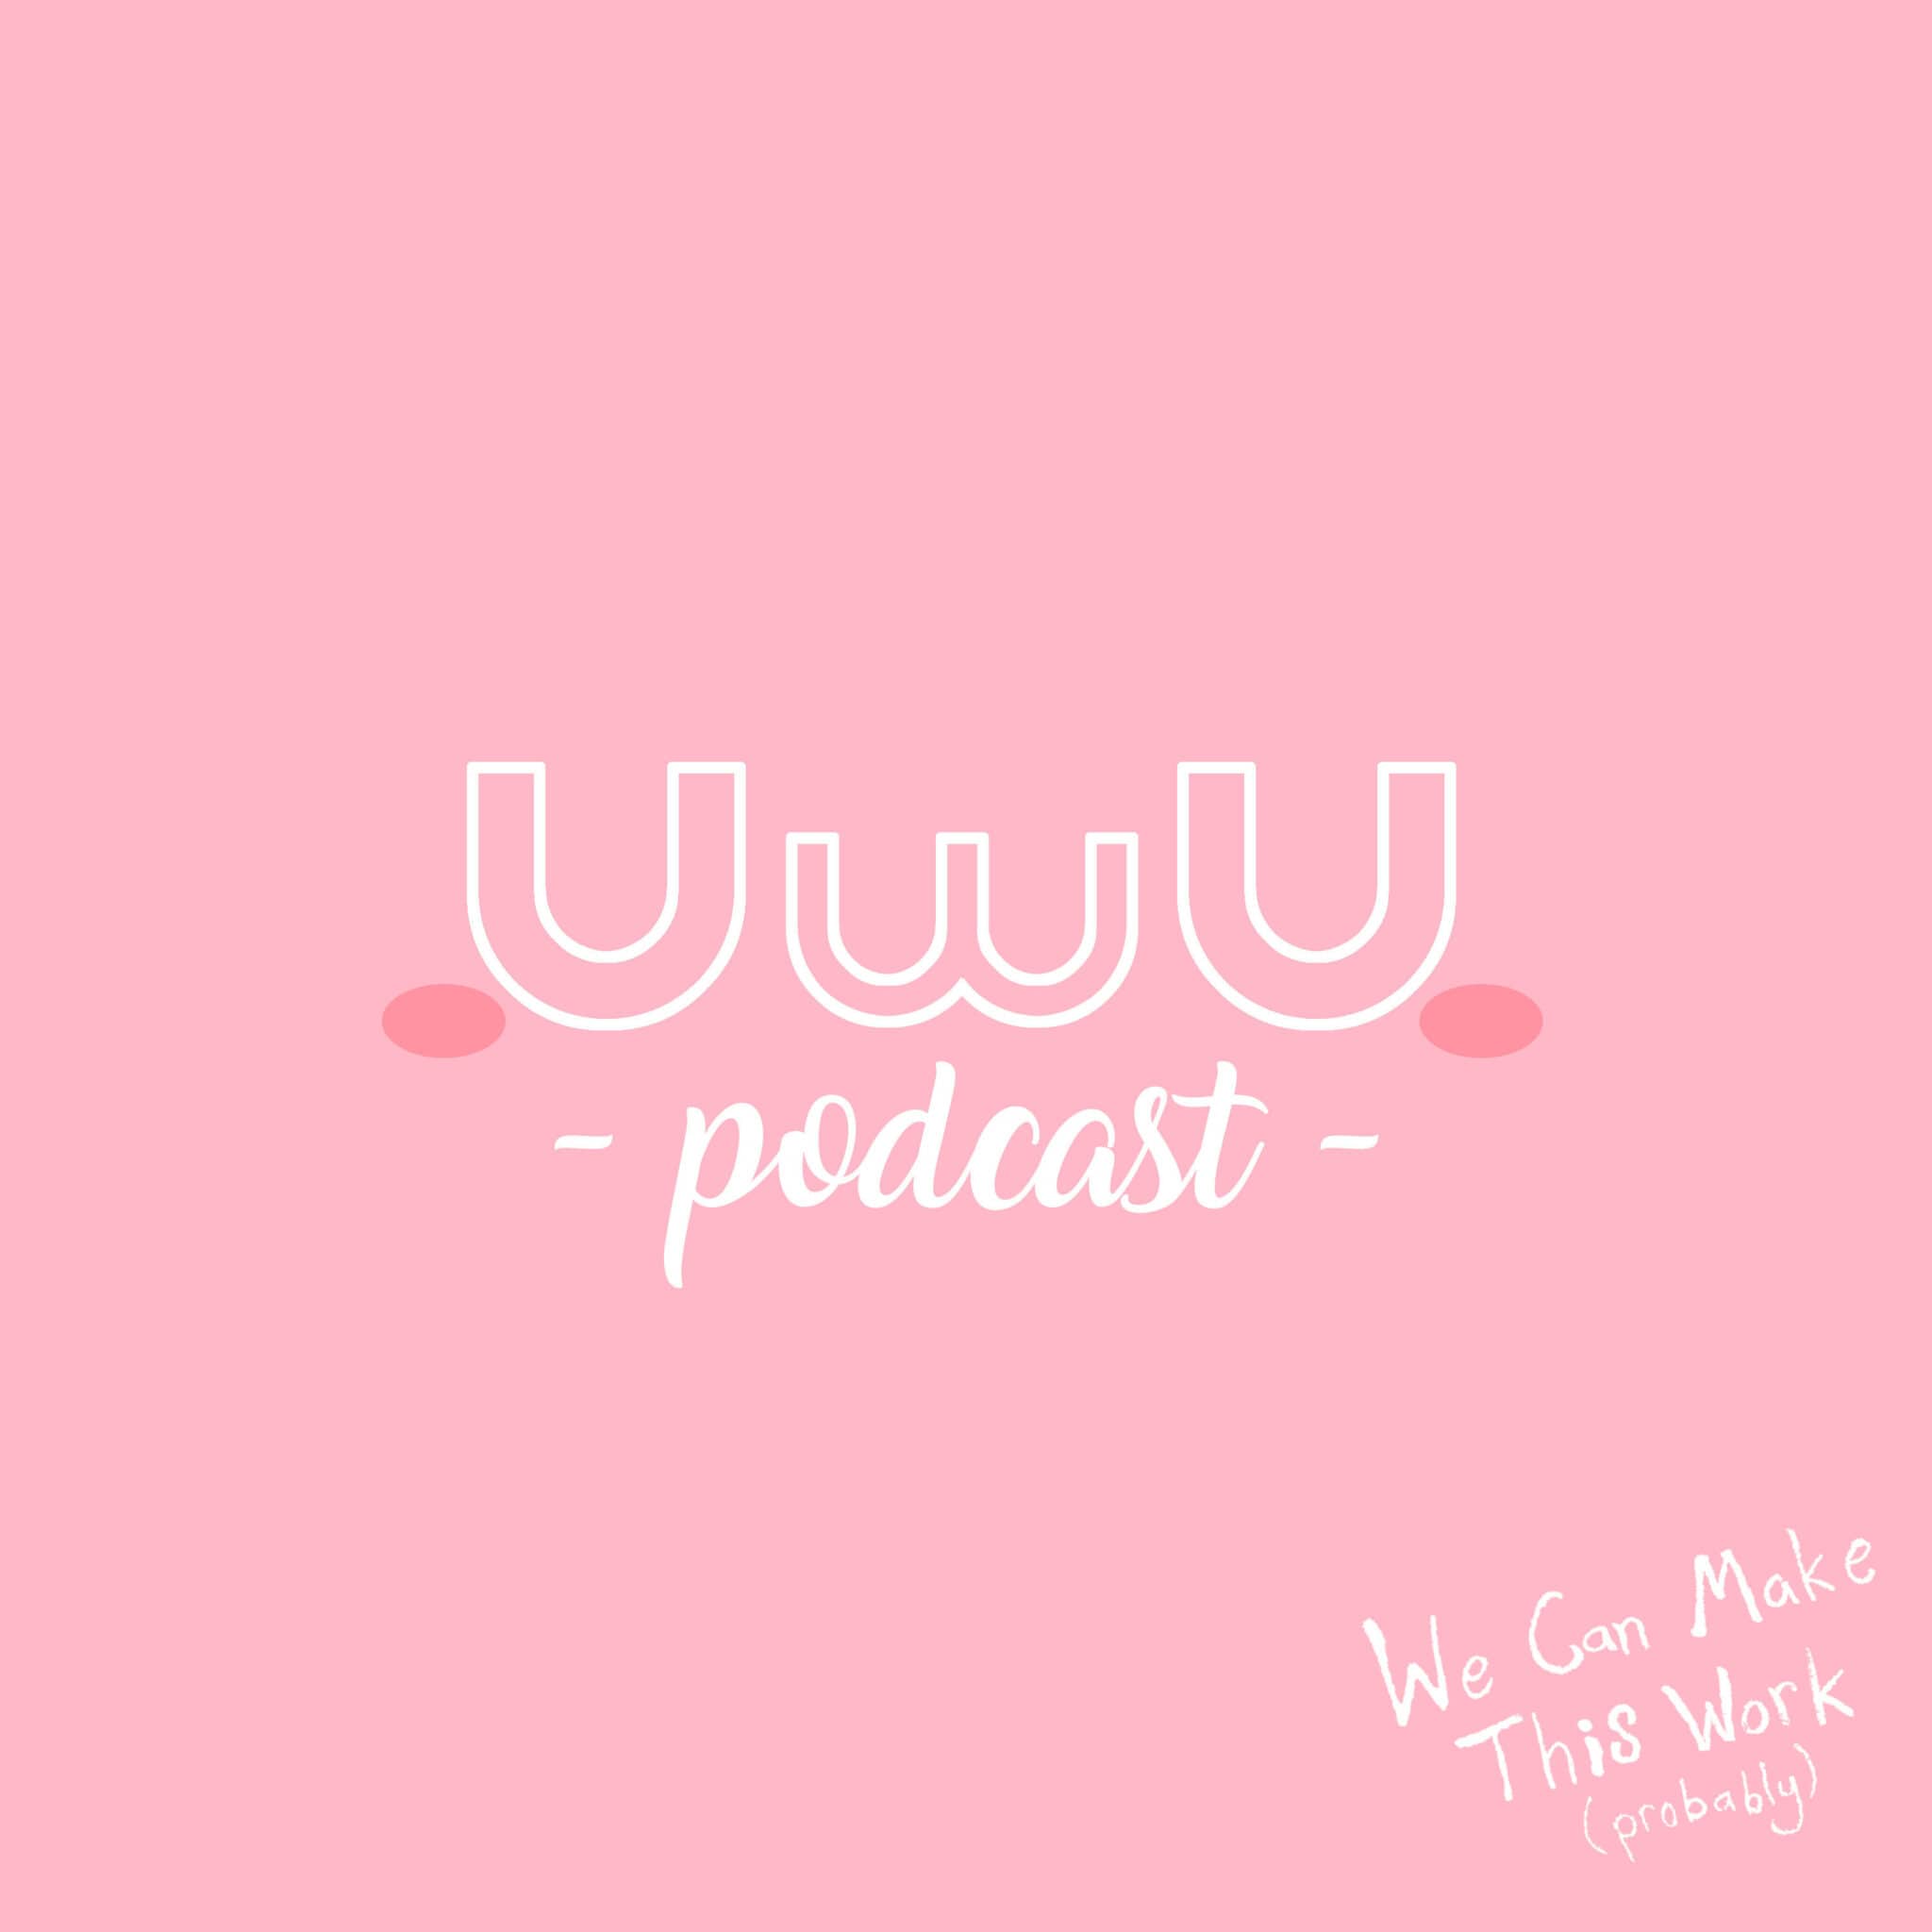 A podcast so cute it'll make you go UwU~!